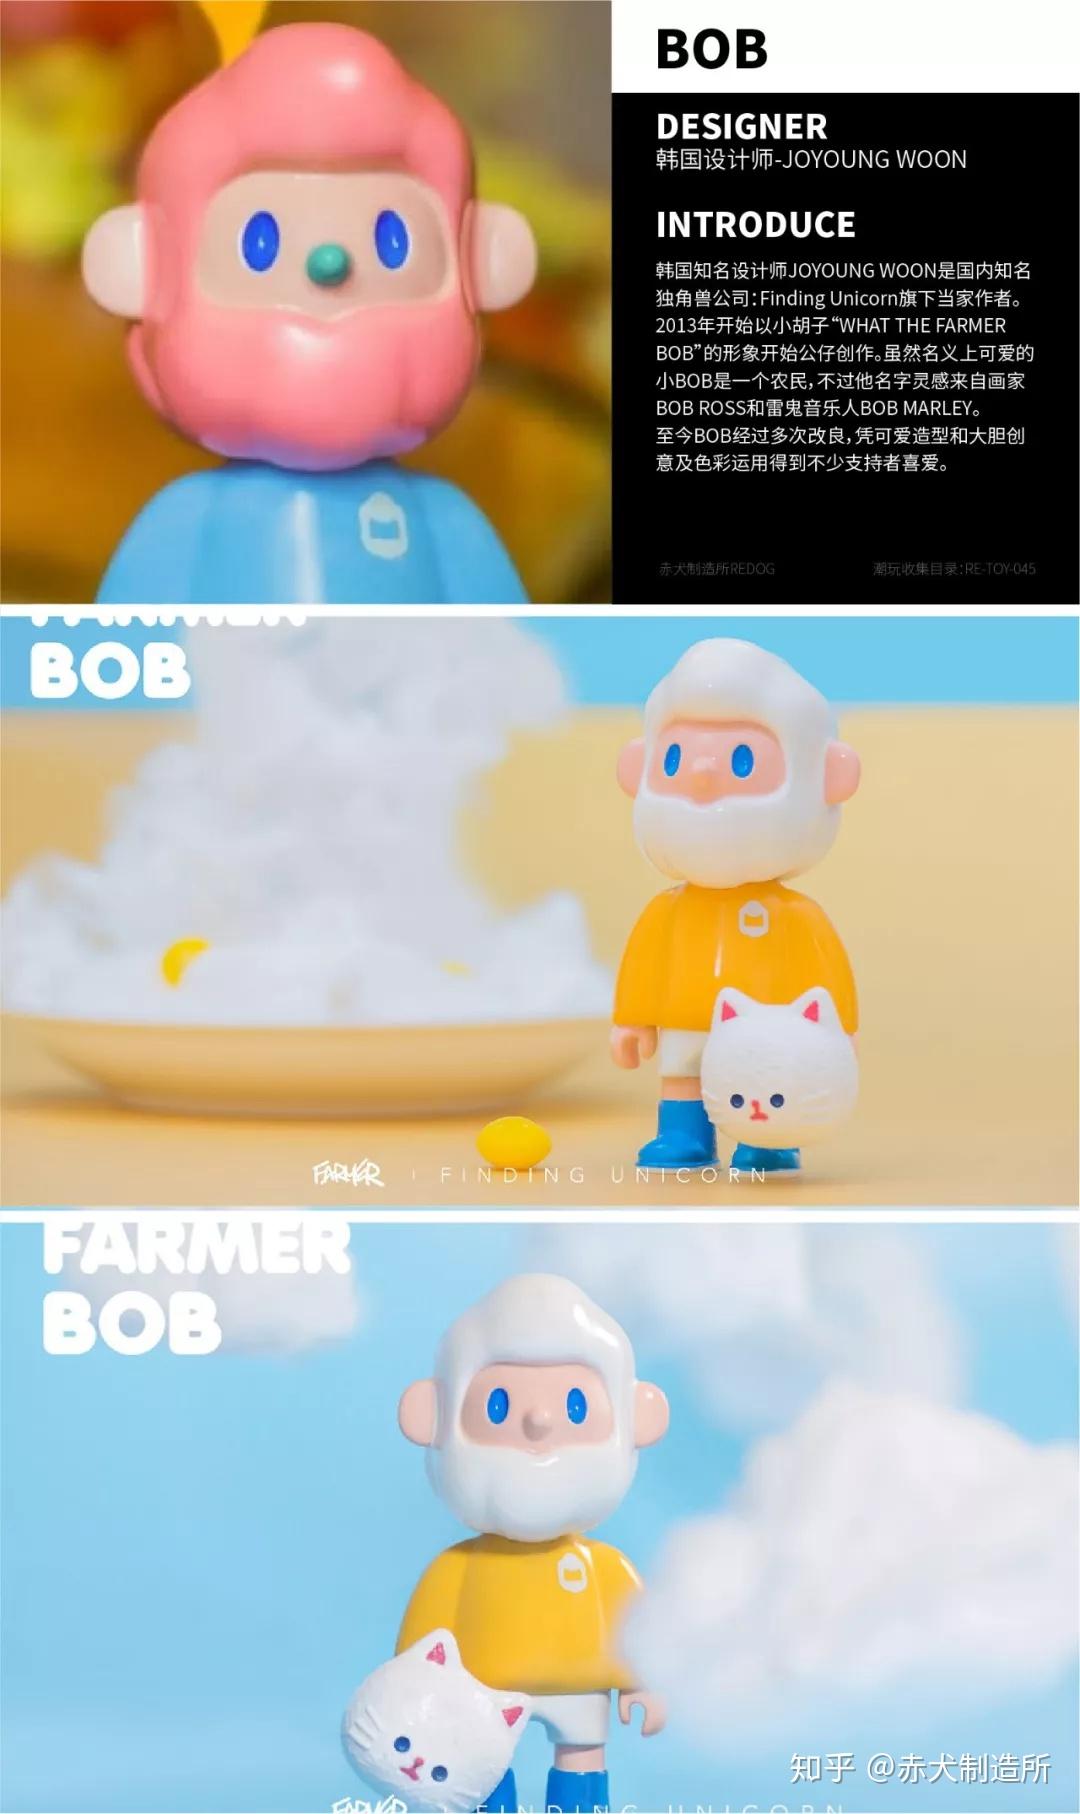 farmer bob设计师图片